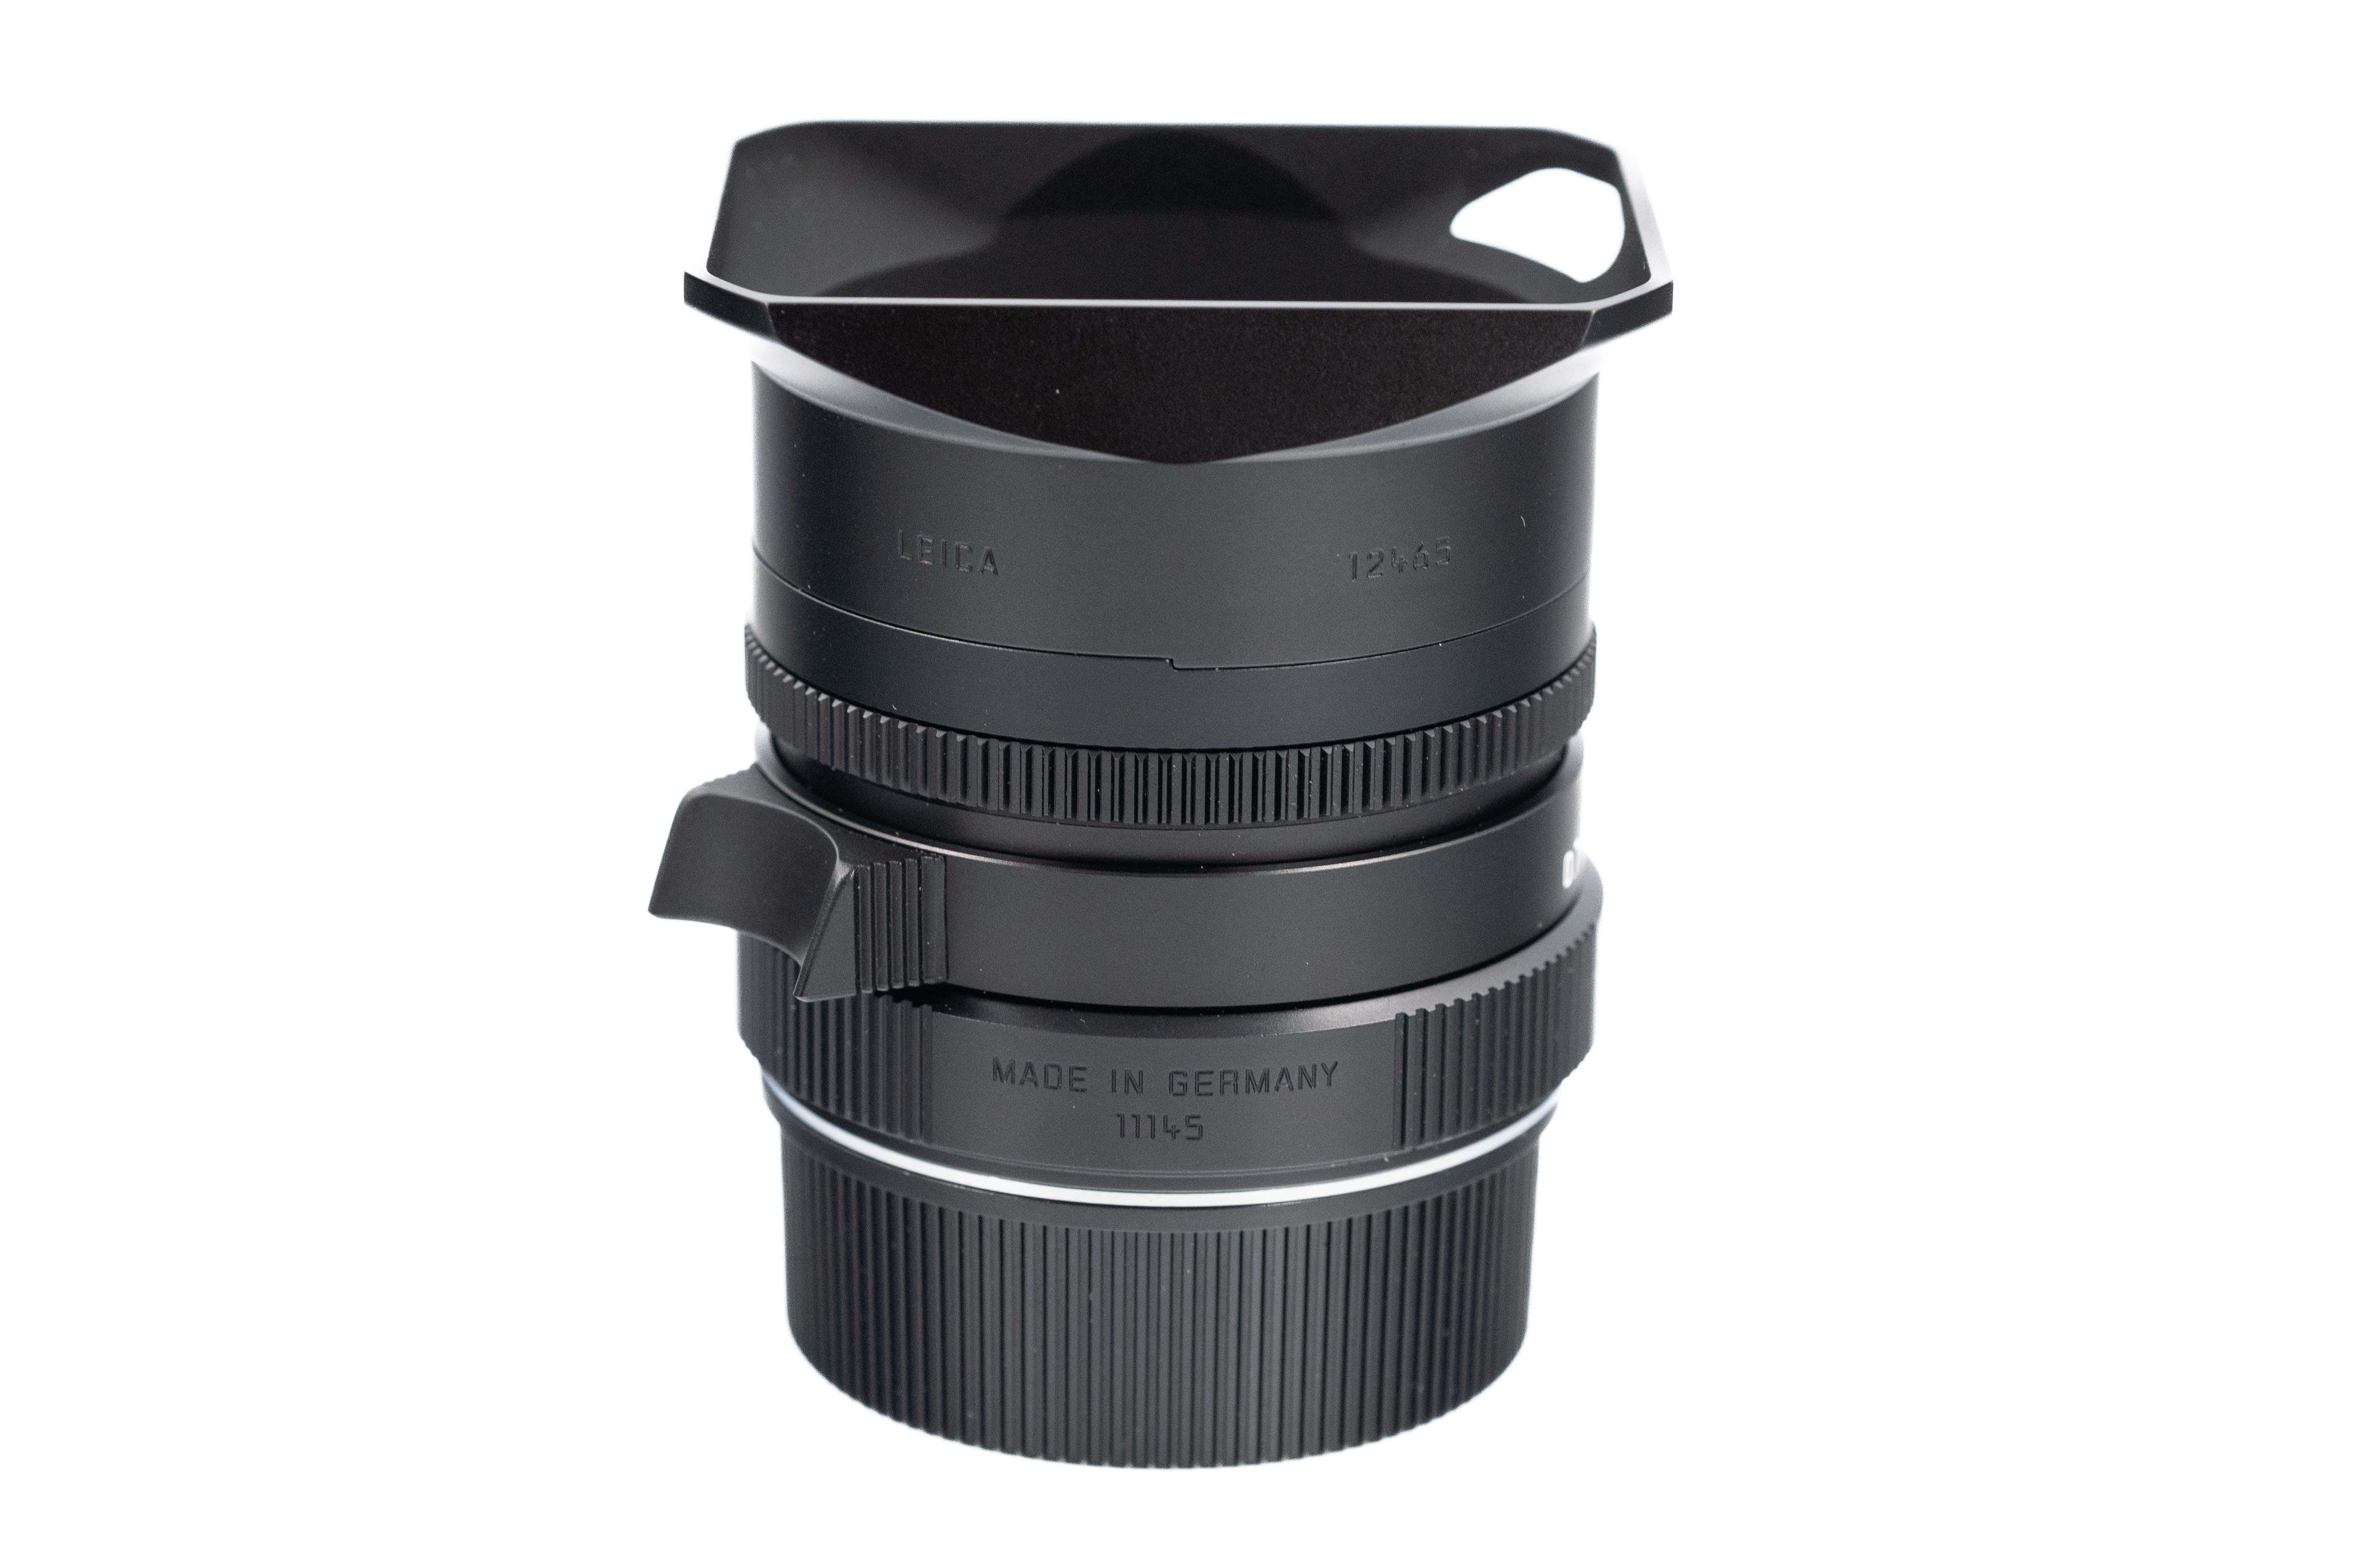 Leica Super-Elmar-M 21mm f/3.4 ASPH 11145